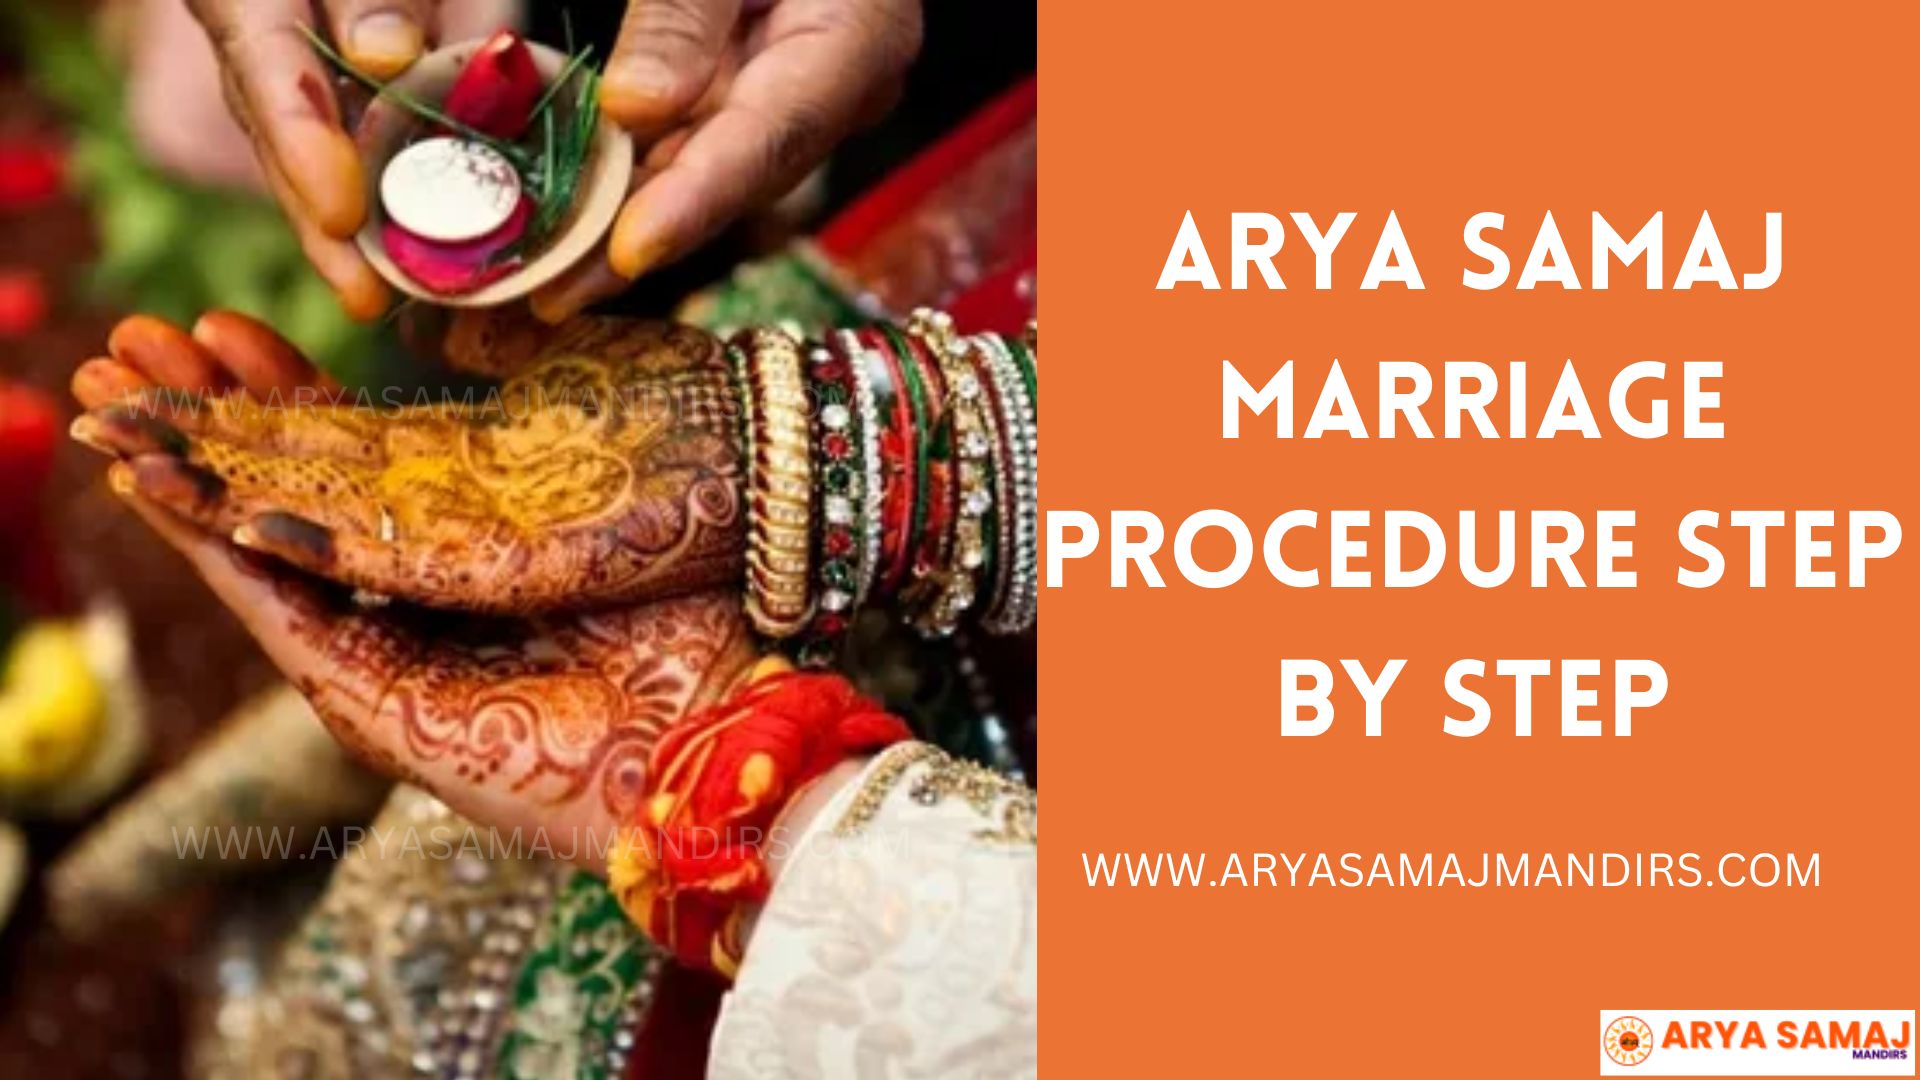 Arya Samaj Marriage Procedure